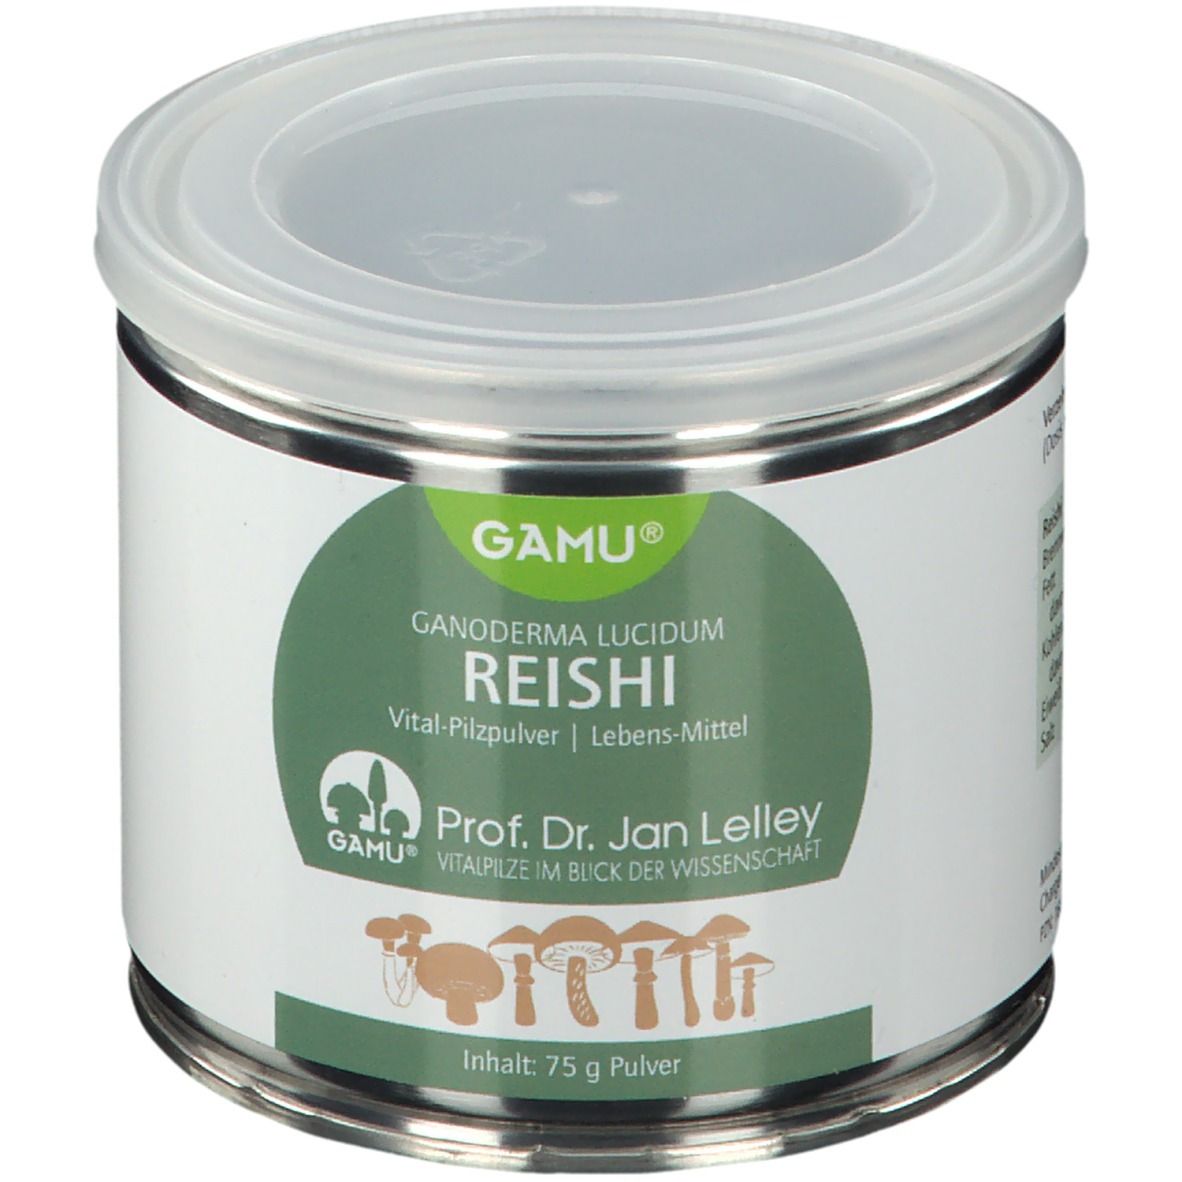 GAMU® REISHI Vital-Pilzpulver